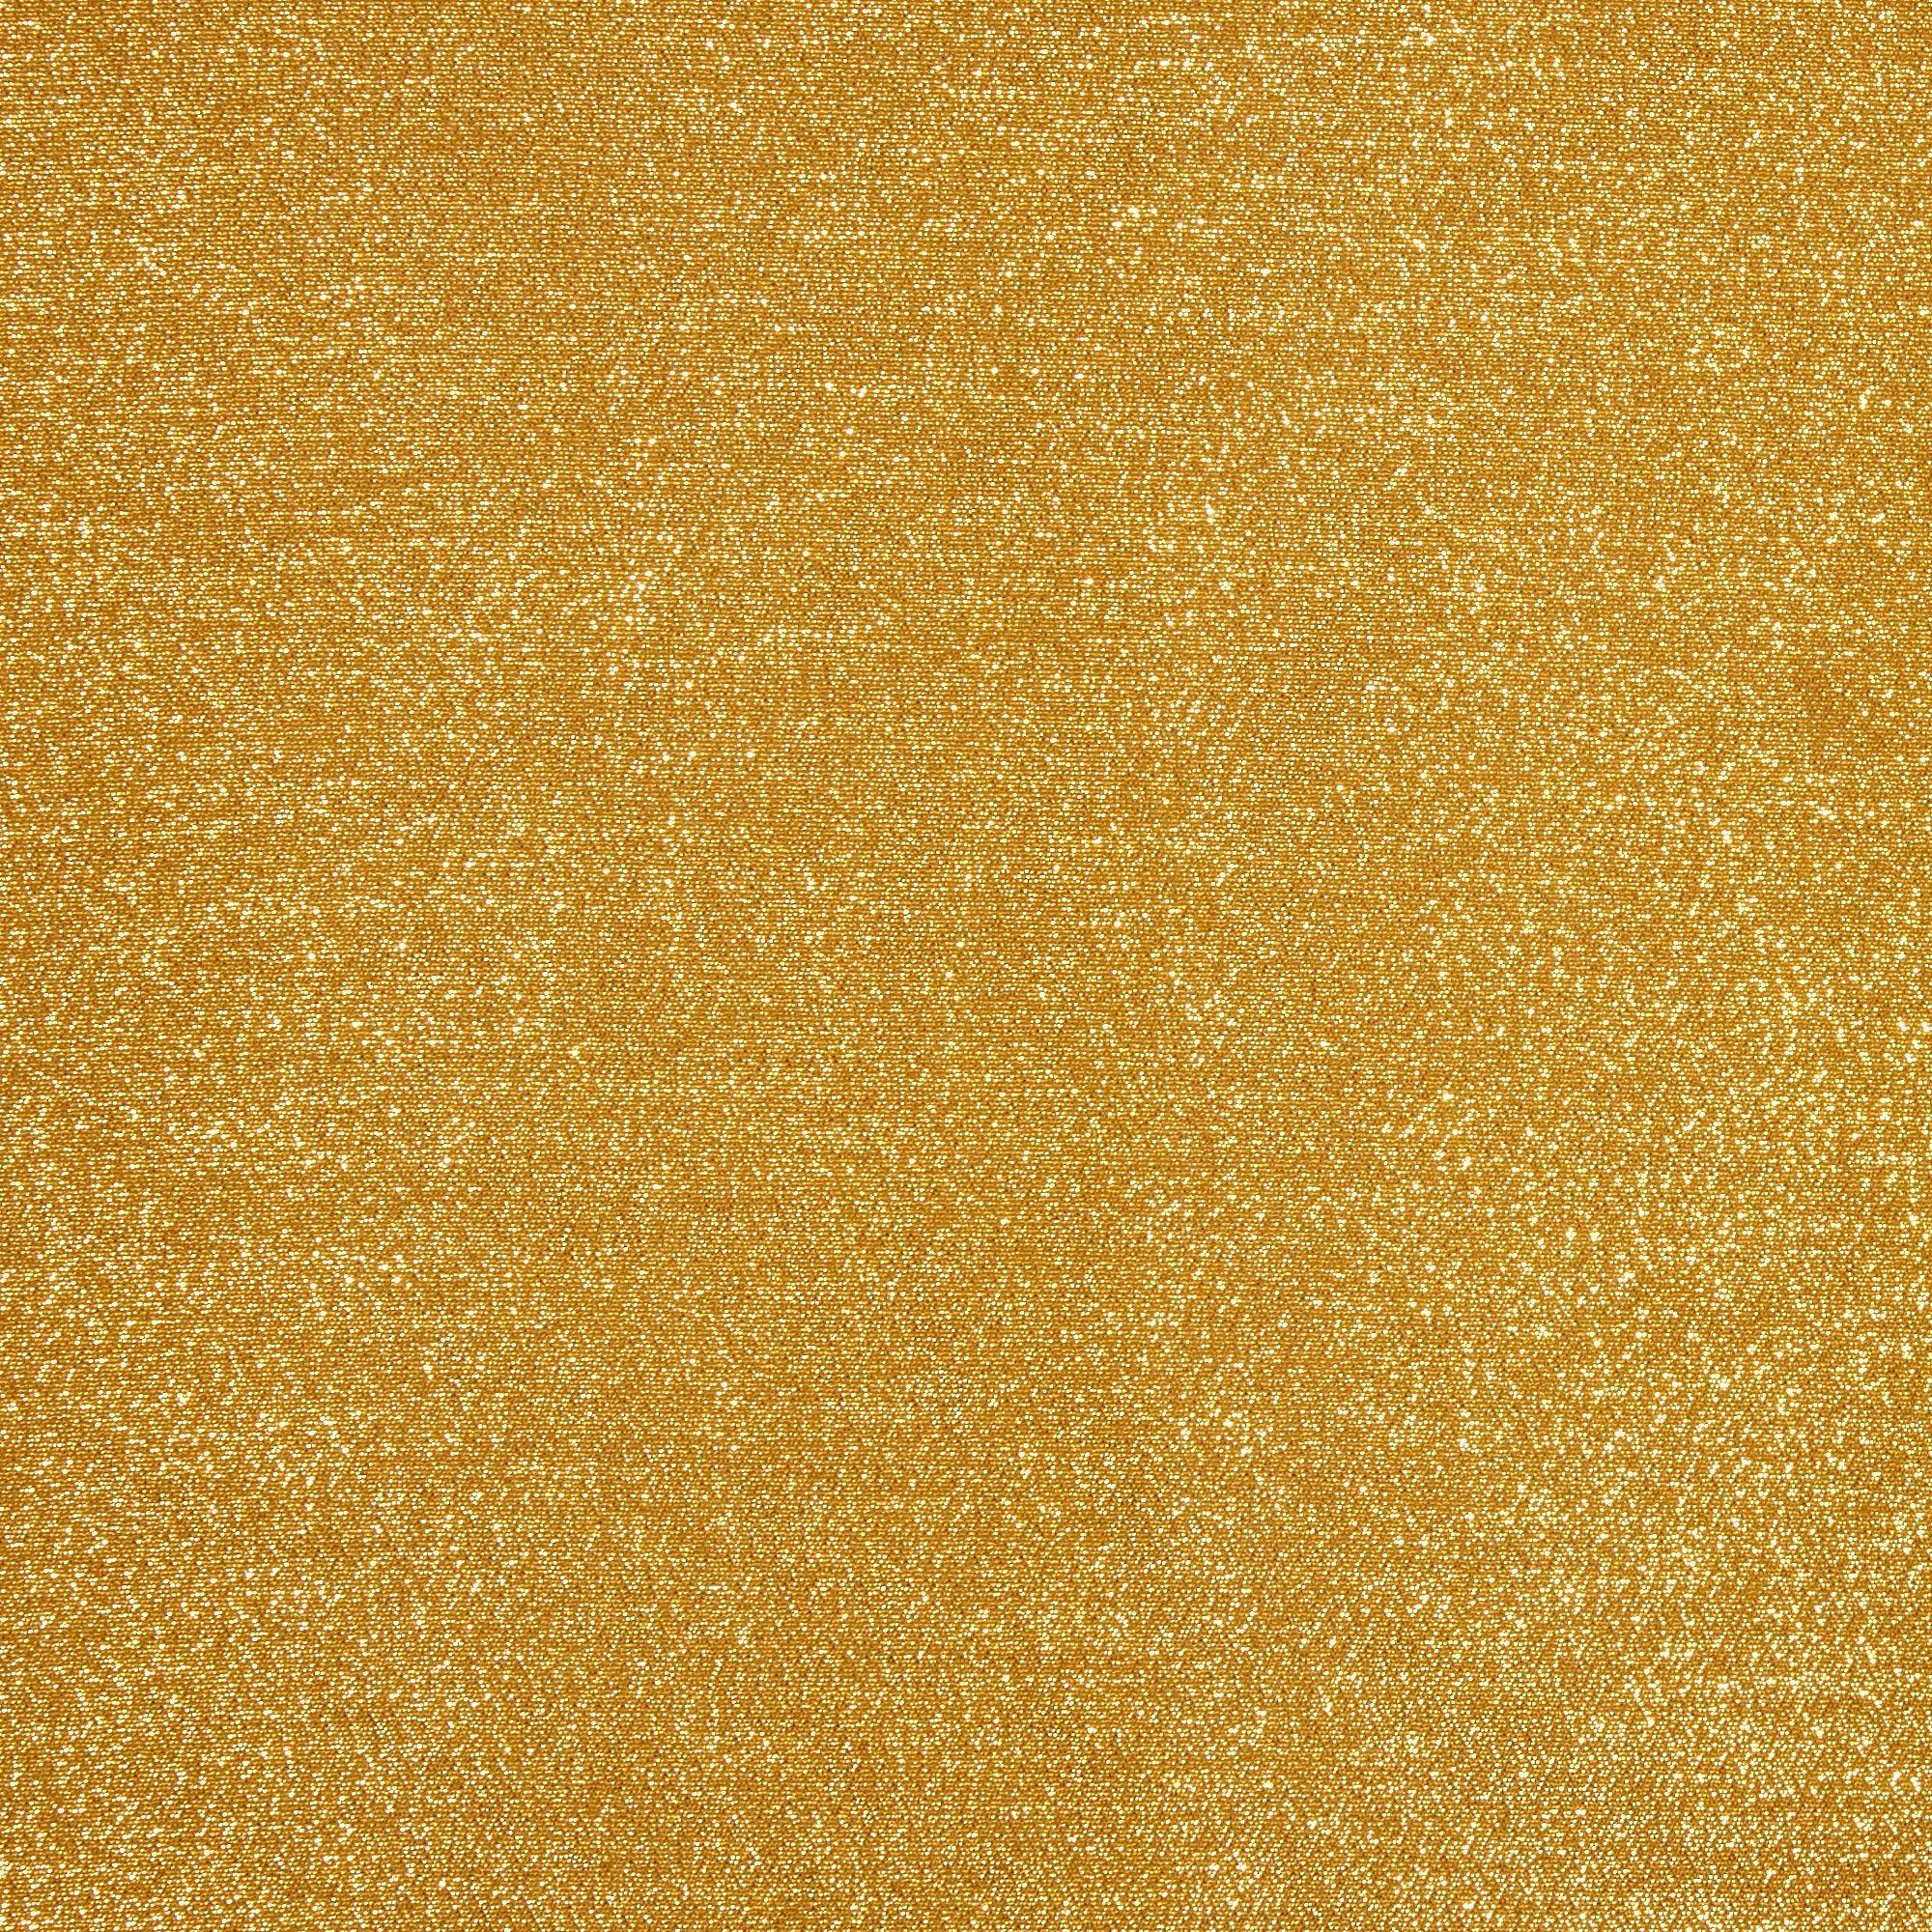 Metallic Gold Fabric Tablecloth - Size - 60 x 84